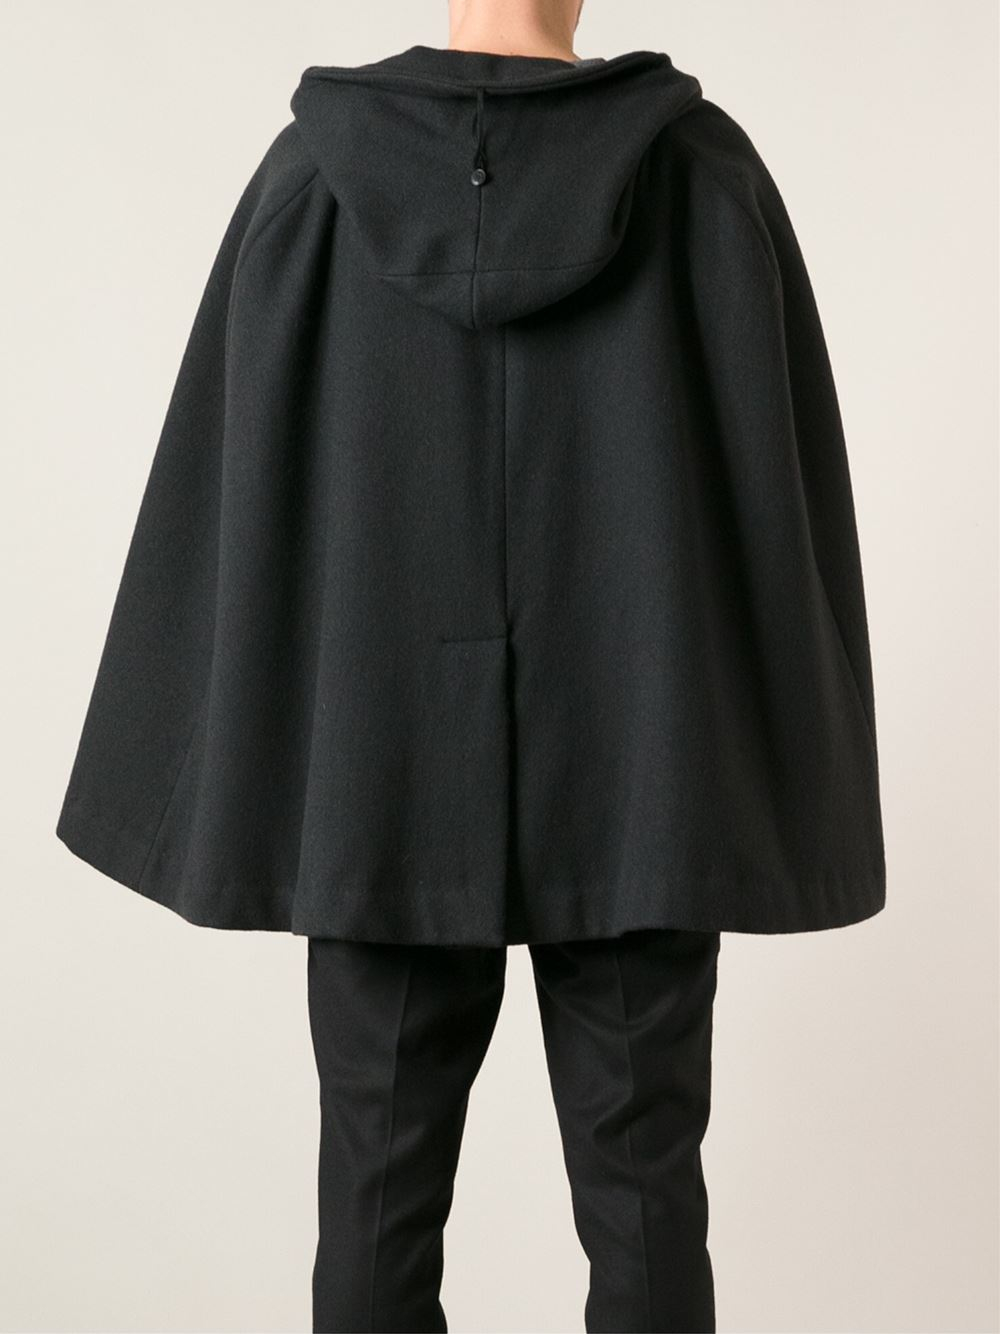 Dolce & Gabbana Cape Coat in Black for Men - Lyst